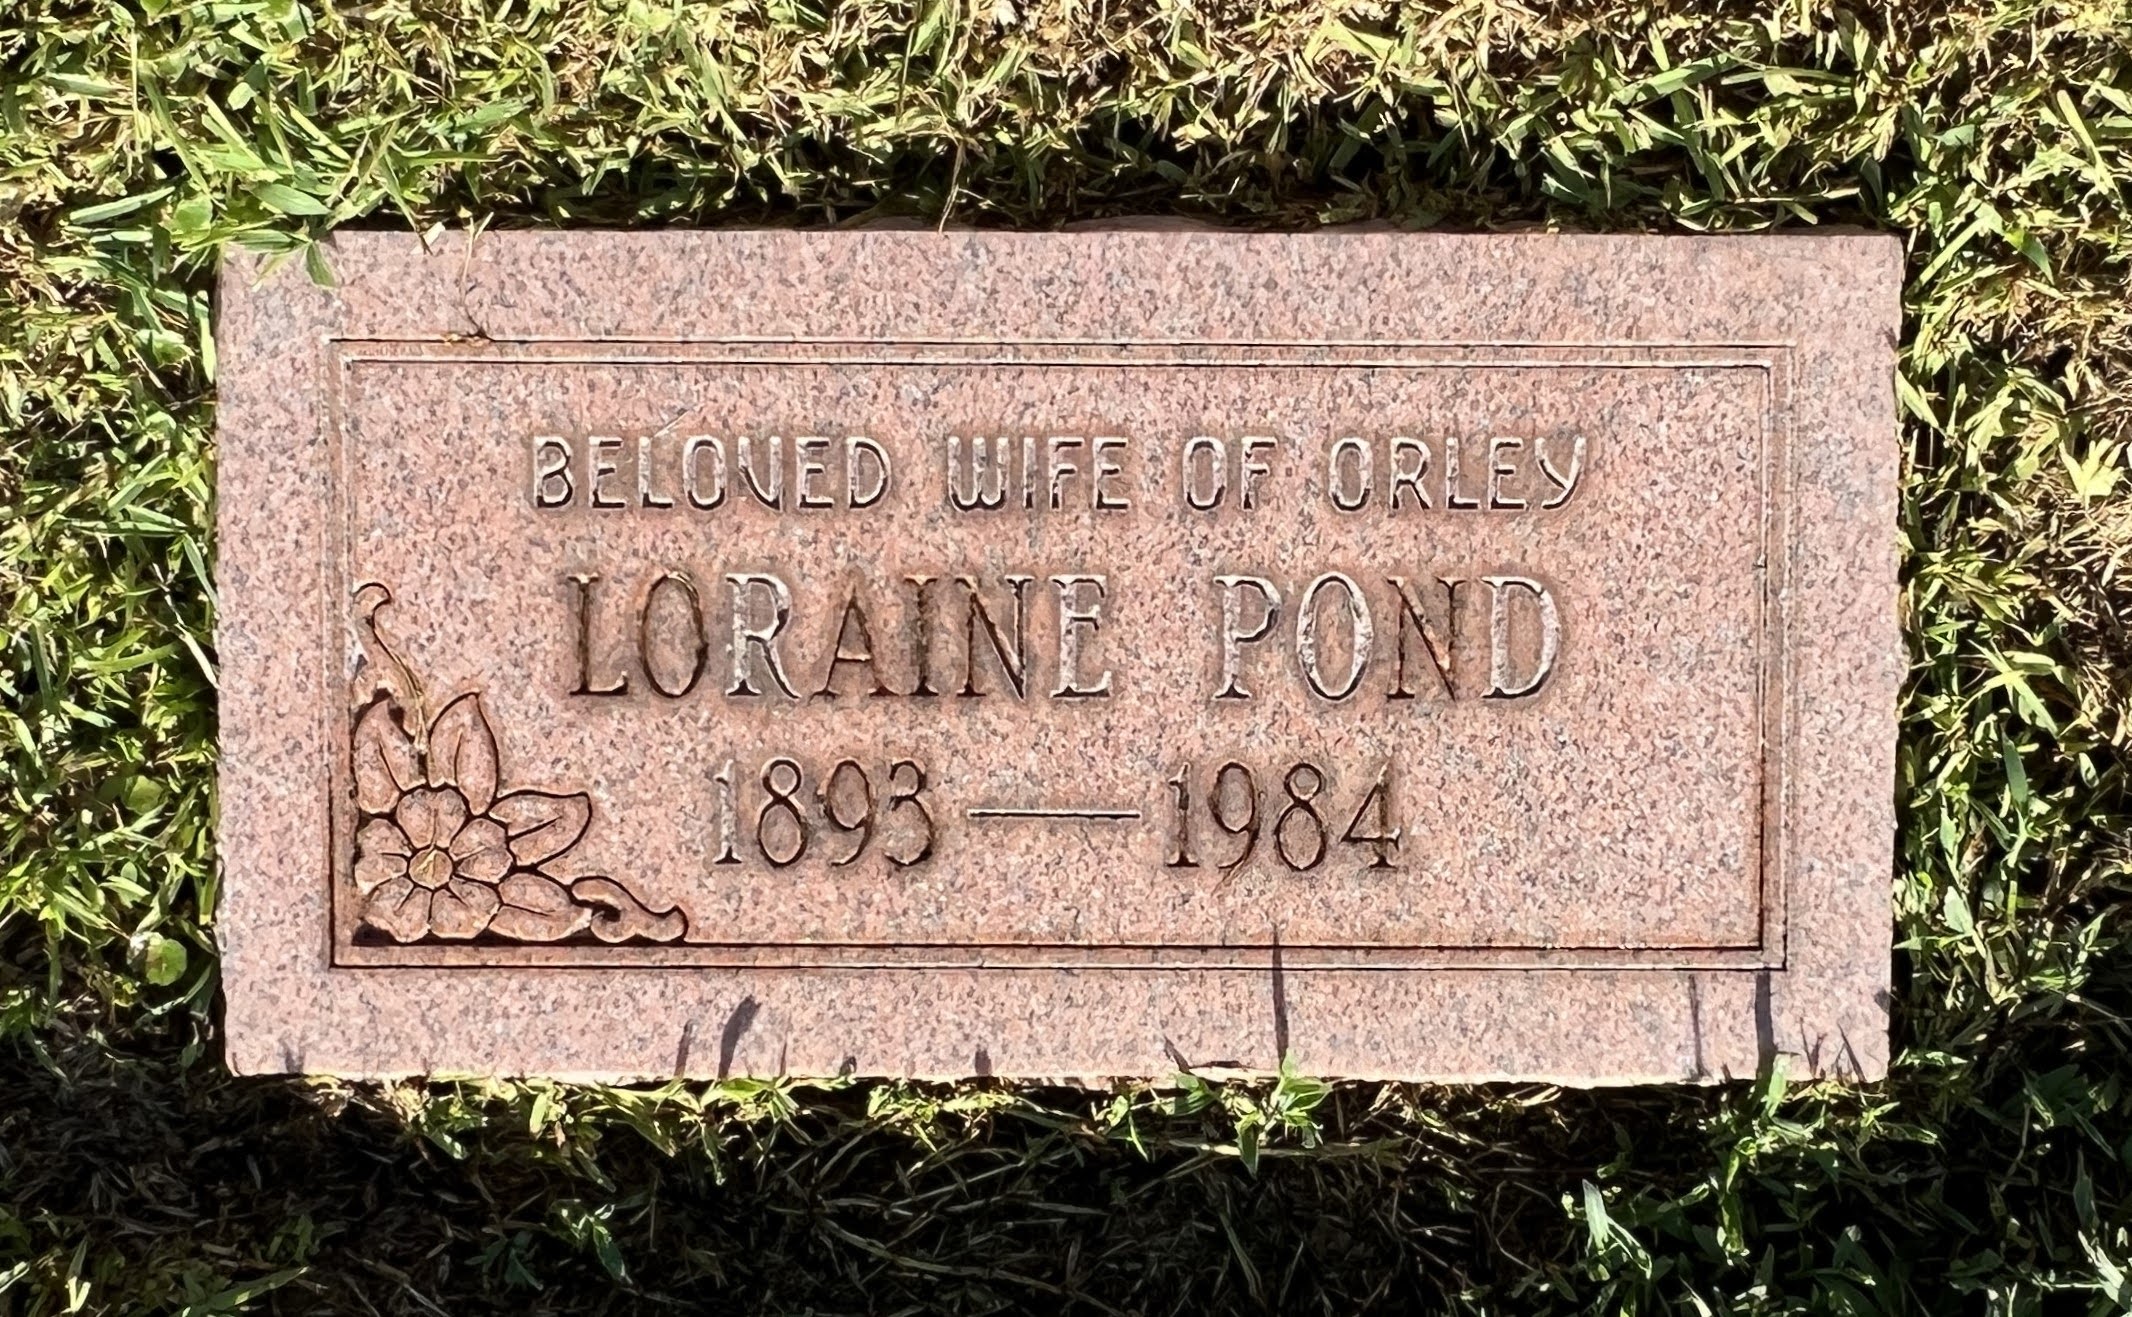 Loraine Pond